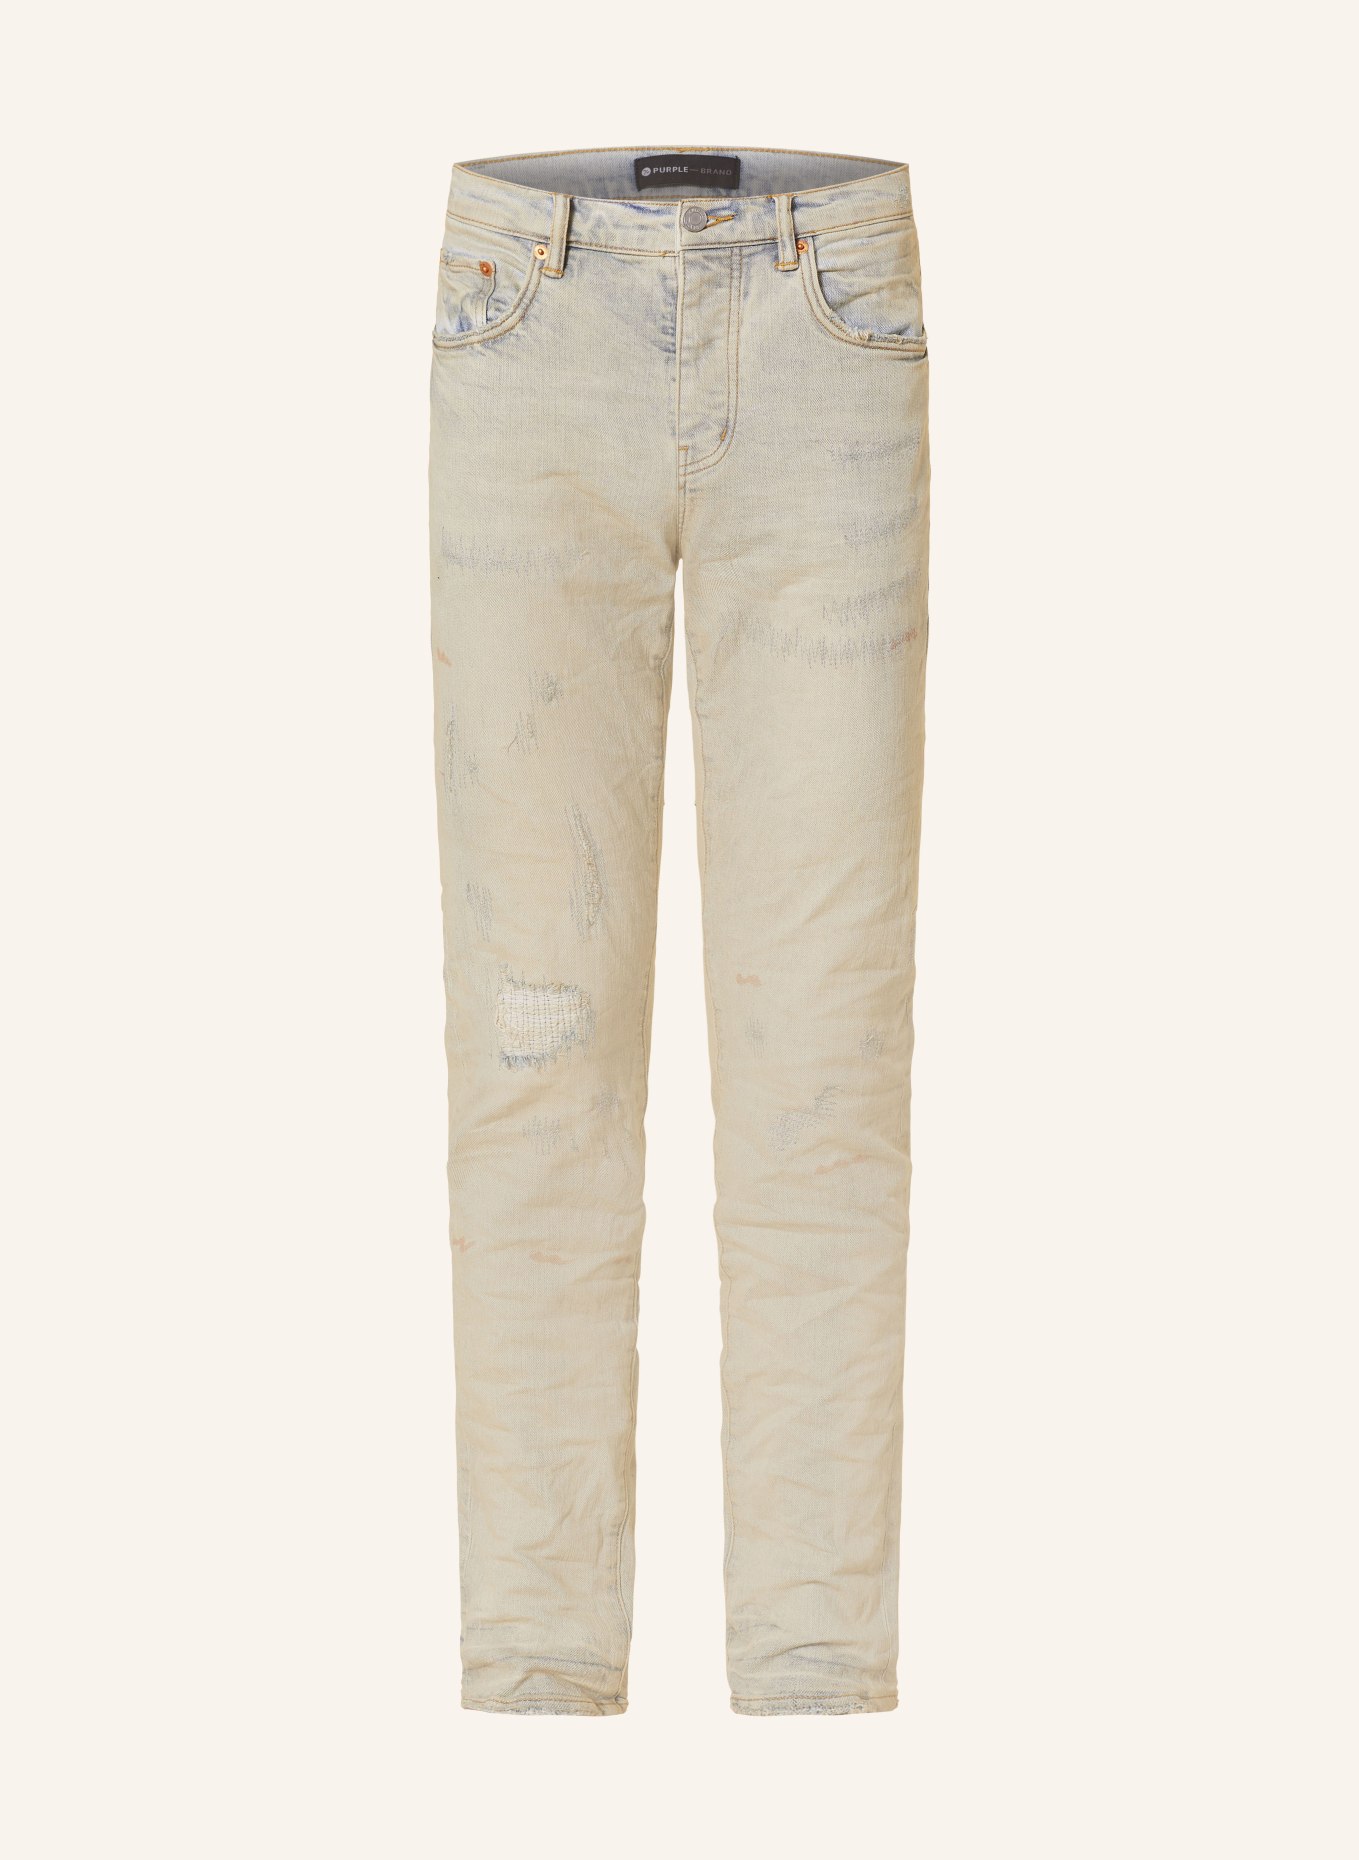 PURPLE BRAND Jeans P001 Skinny Fit, Farbe: Superlight (Bild 1)